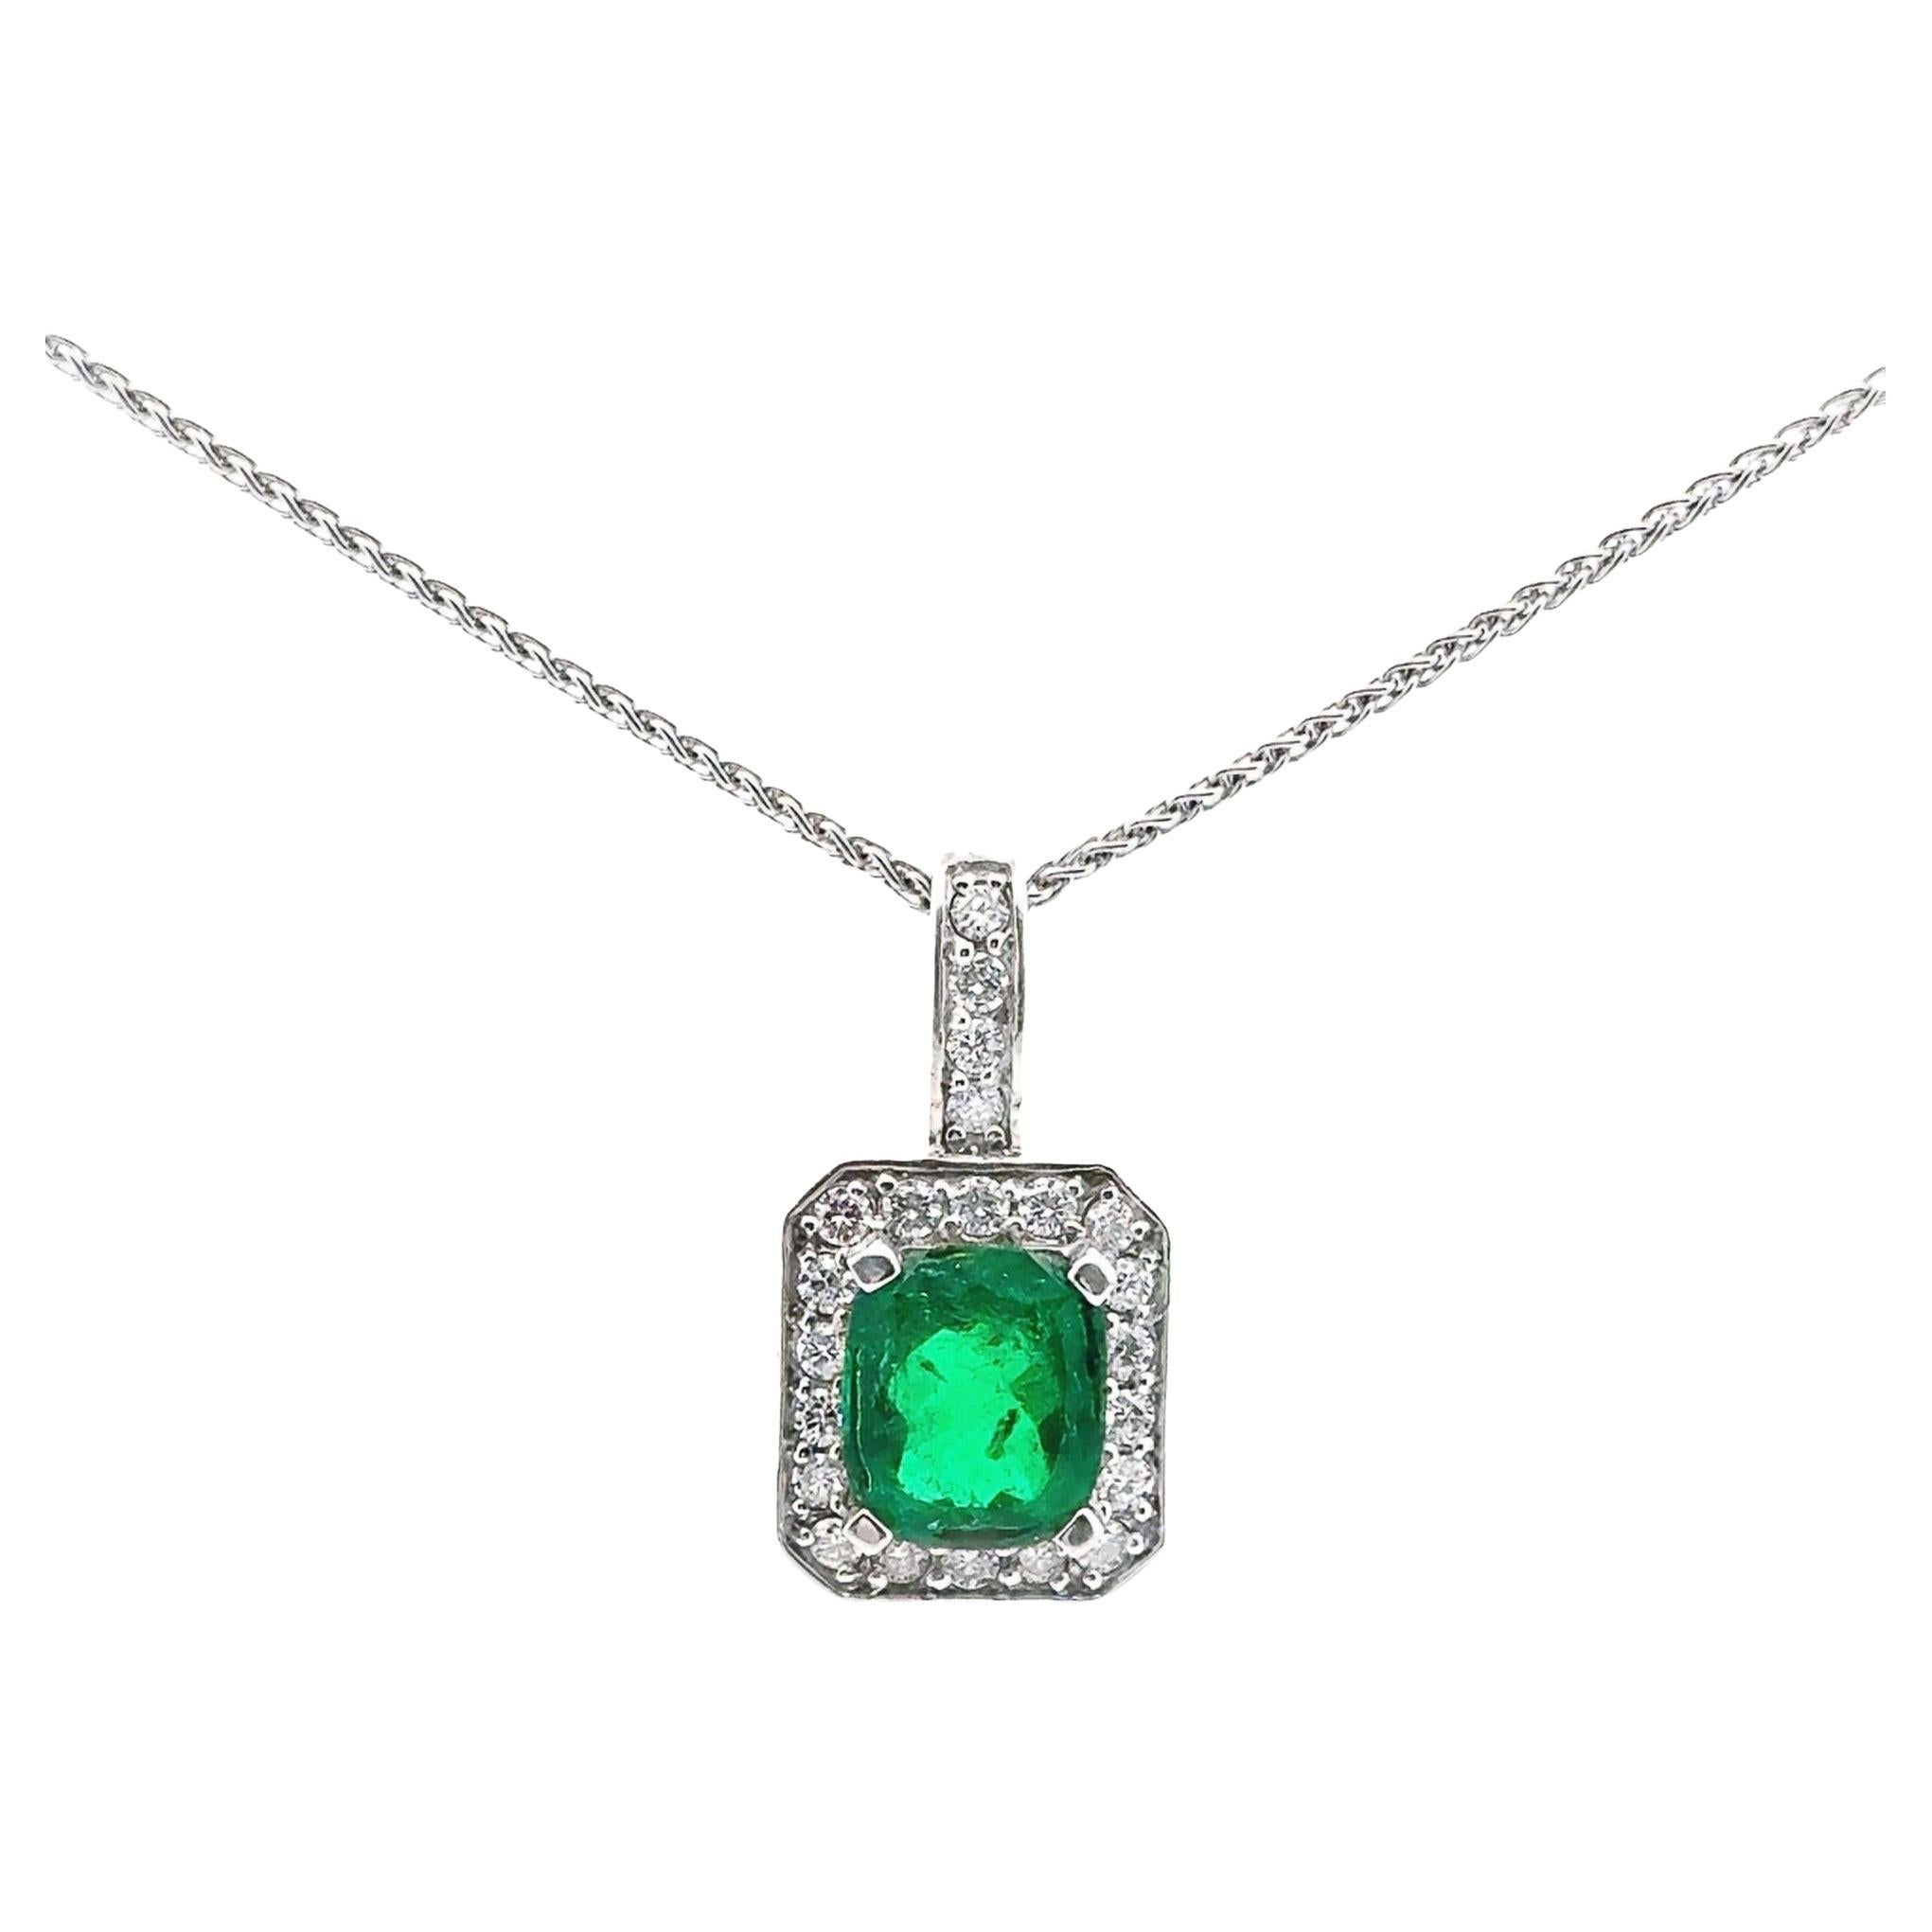 4.83 Carat Emerald 18k White Gold Pendant Necklace